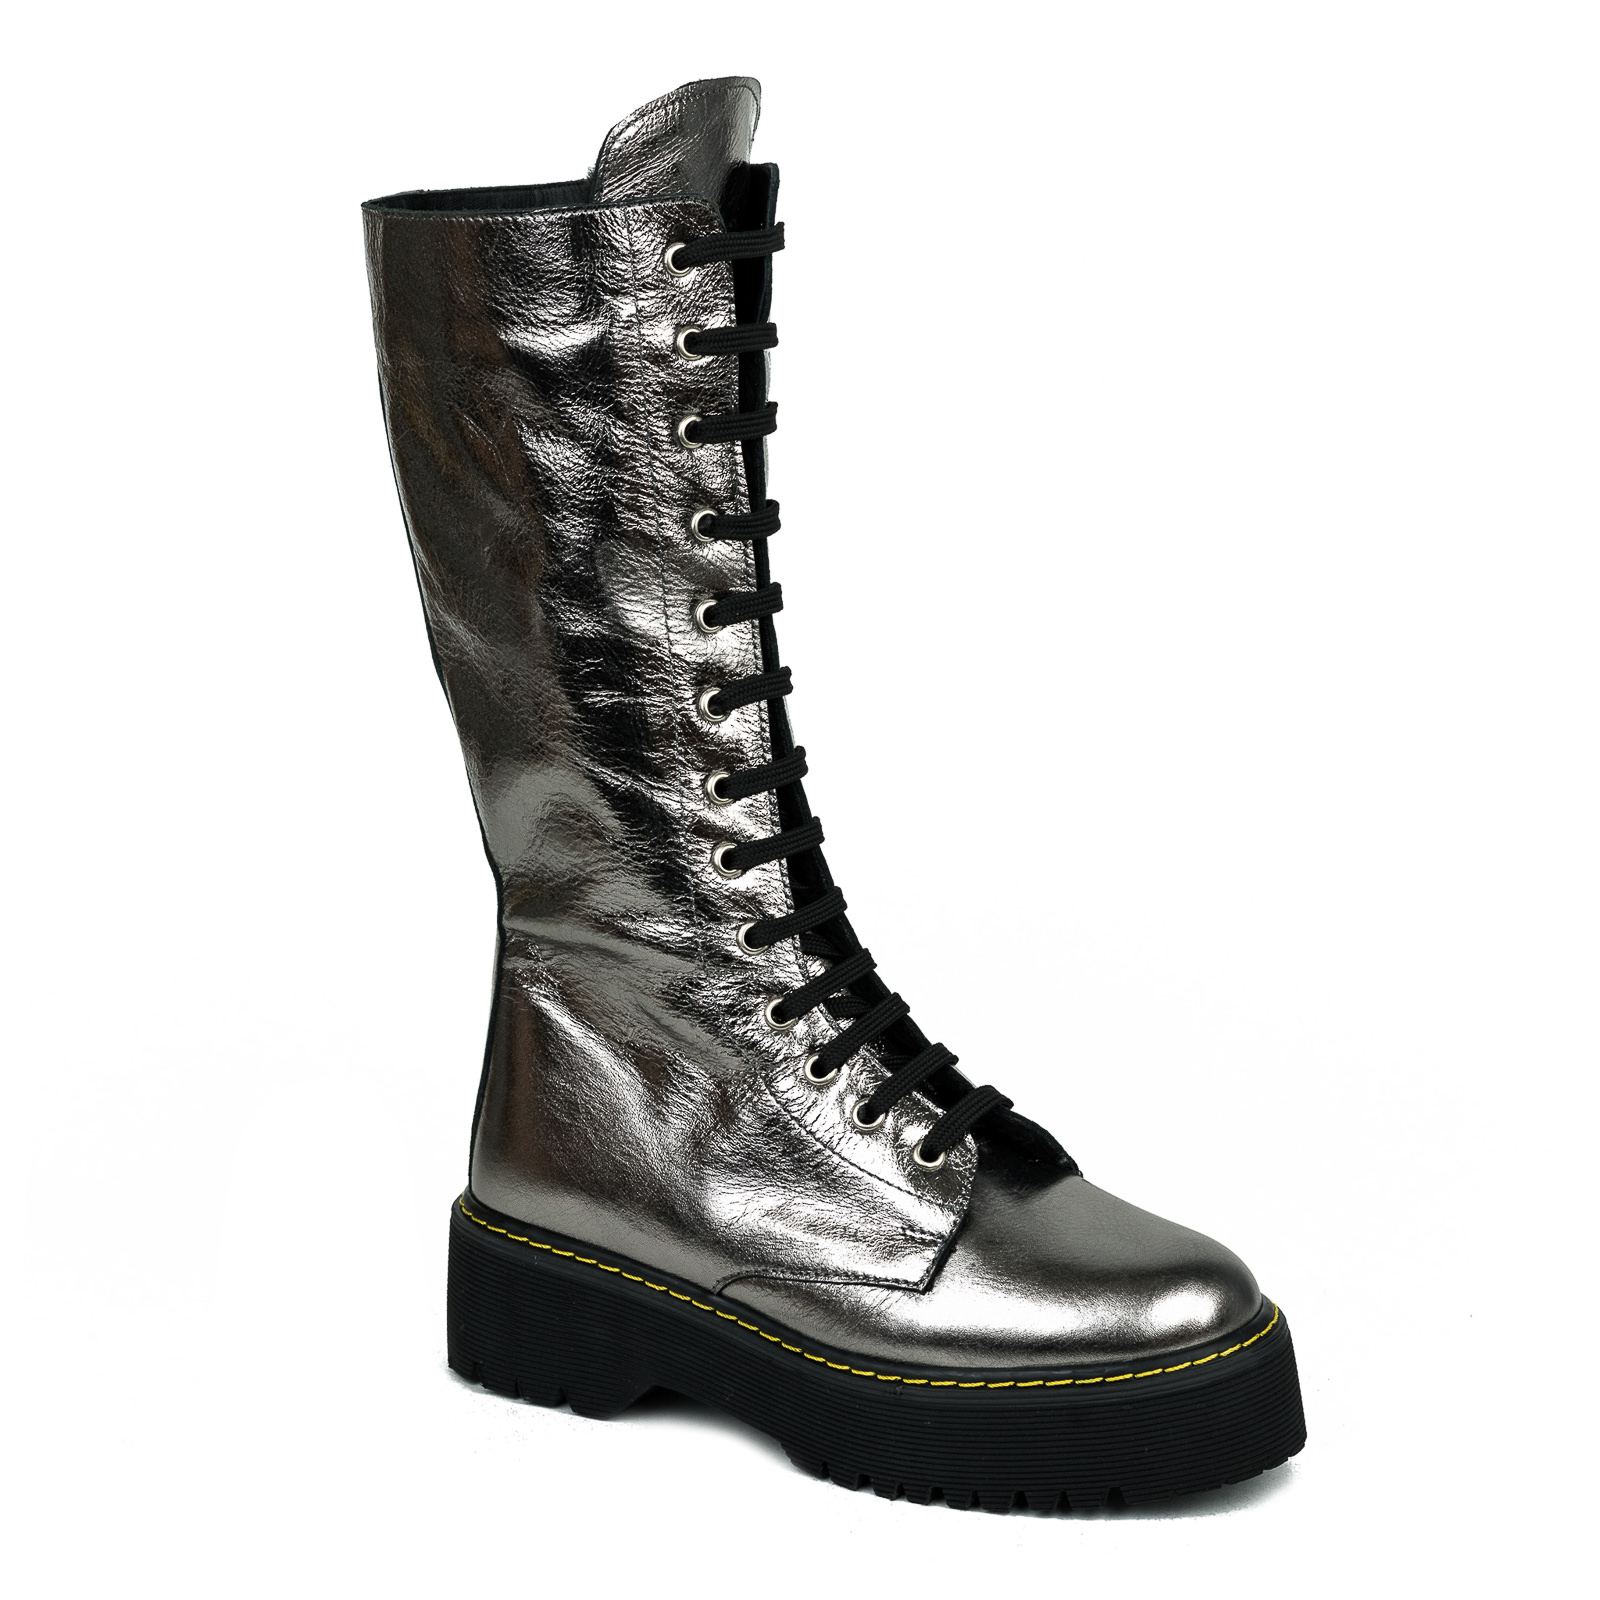 Leather WATERPROOF boots B151 - GRAFIT